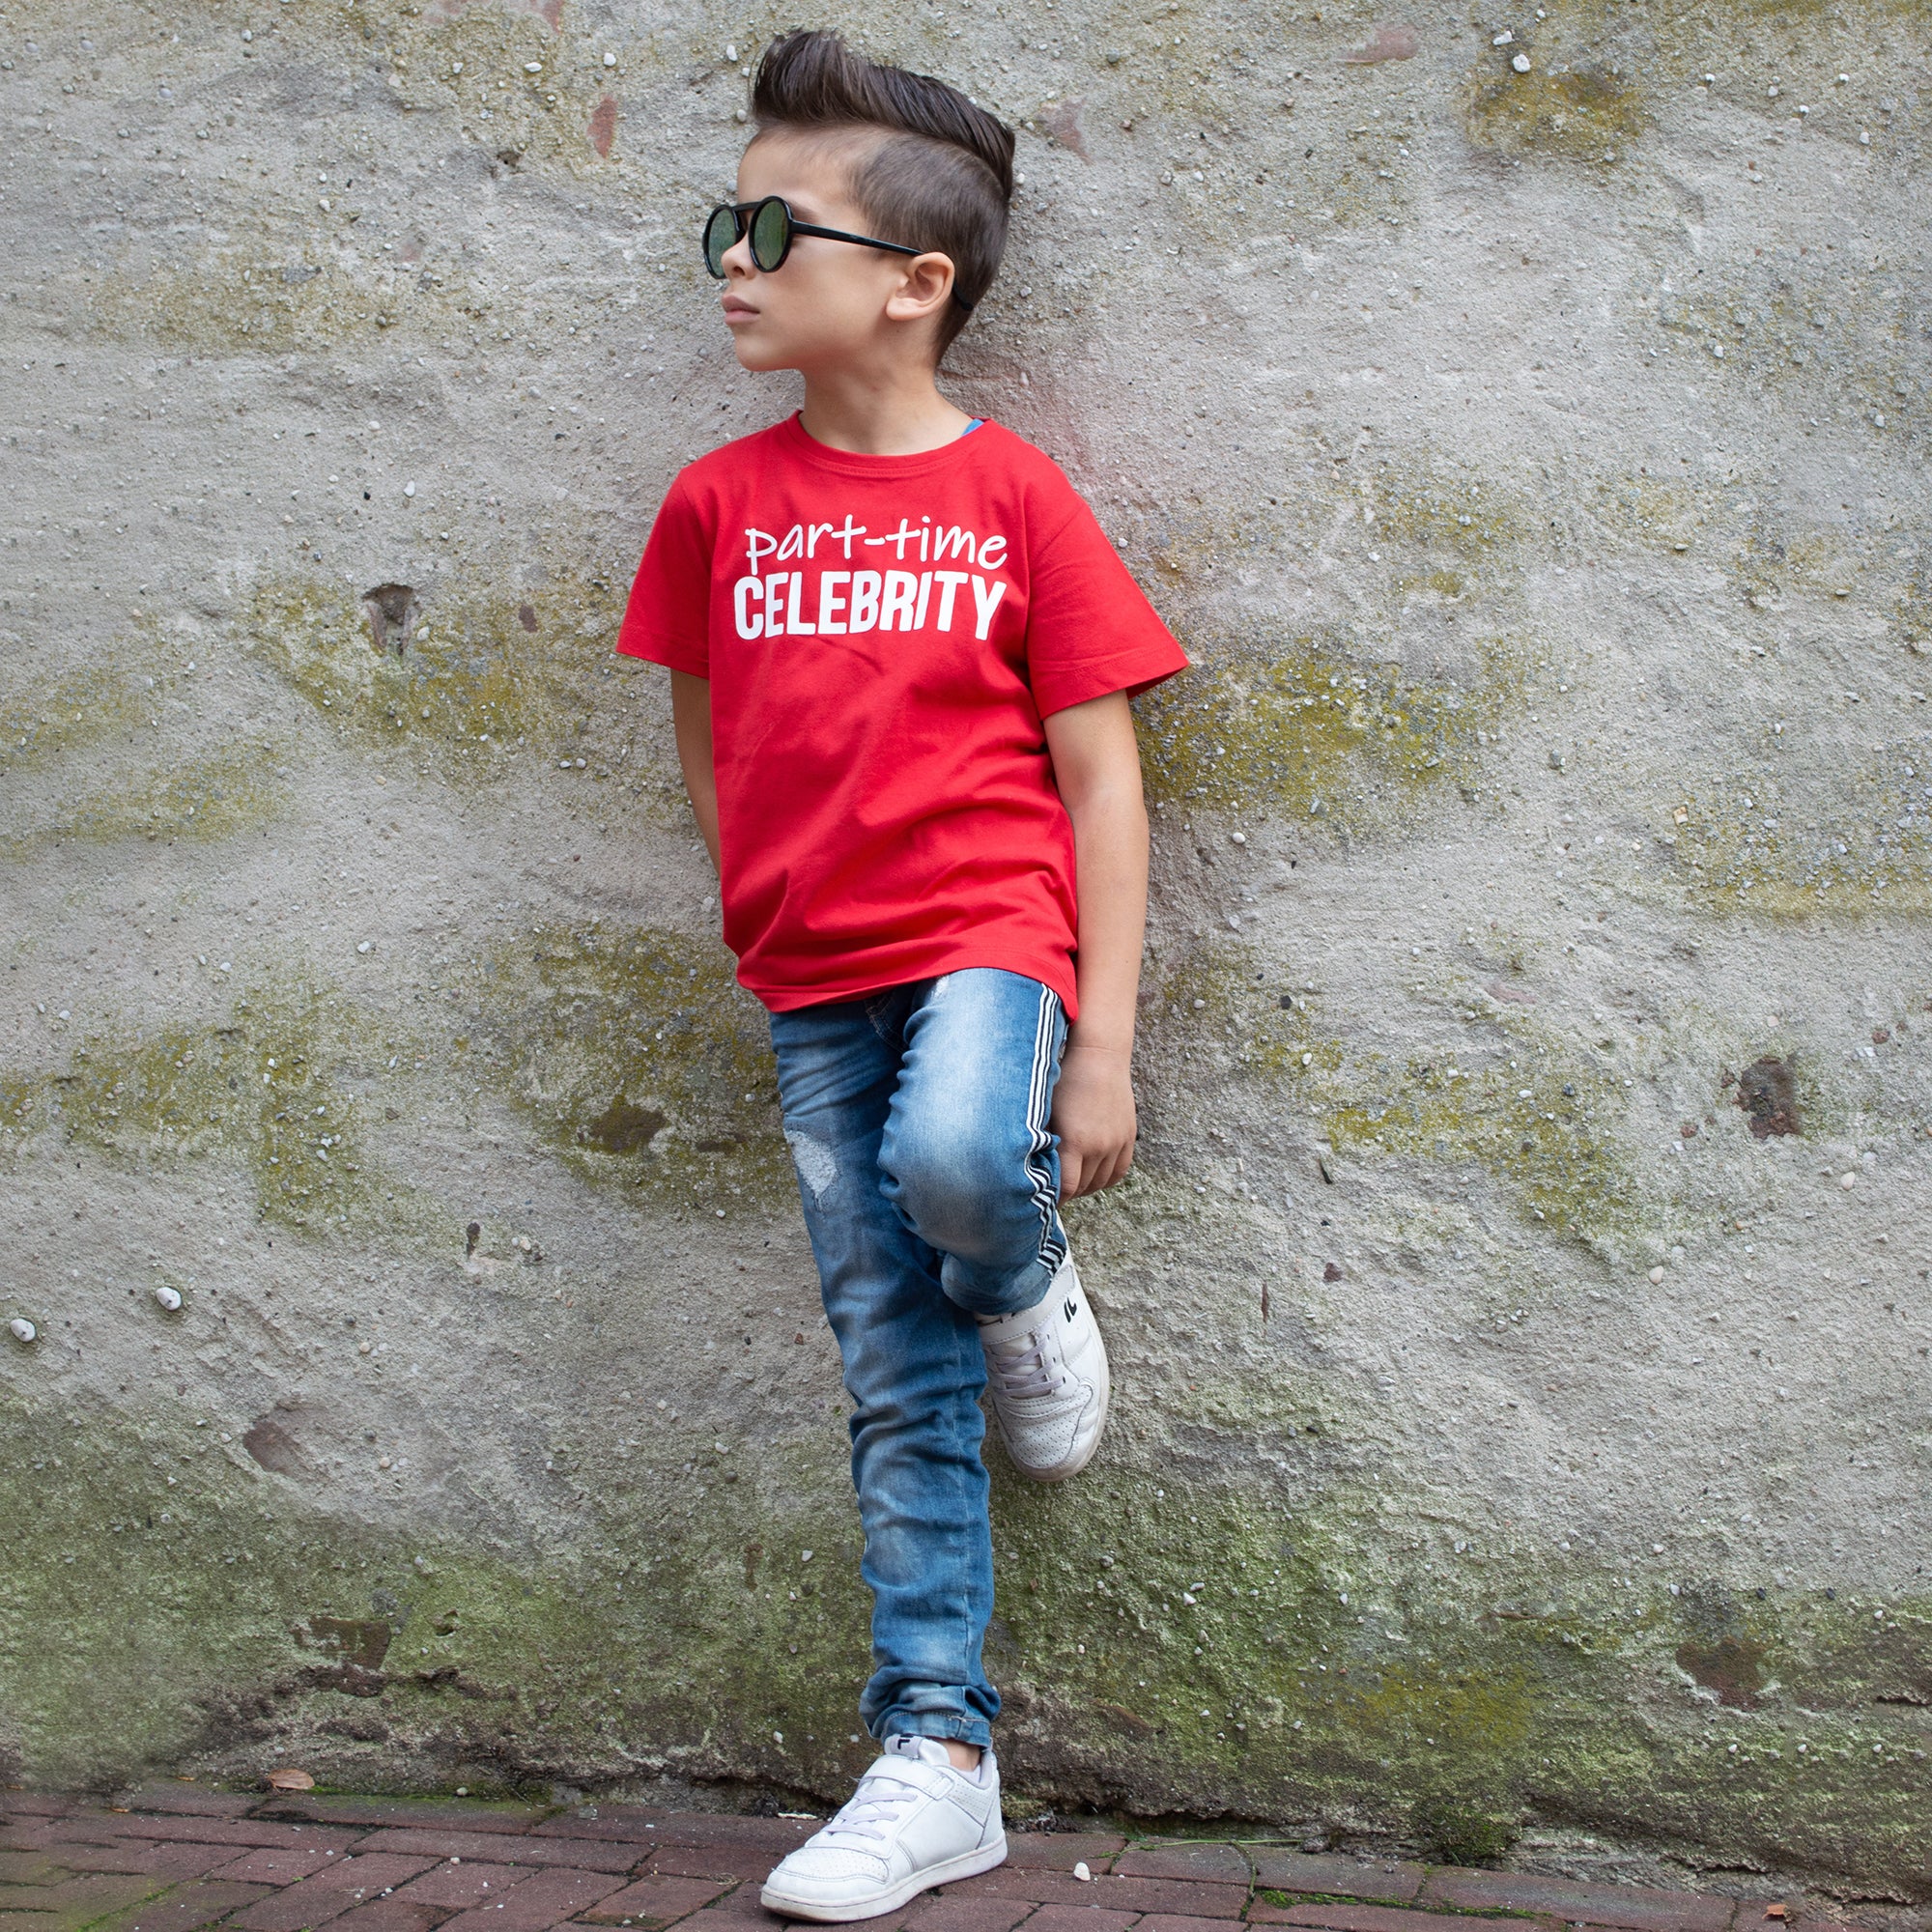 'Part-time celebrity' kids shortsleeve shirt